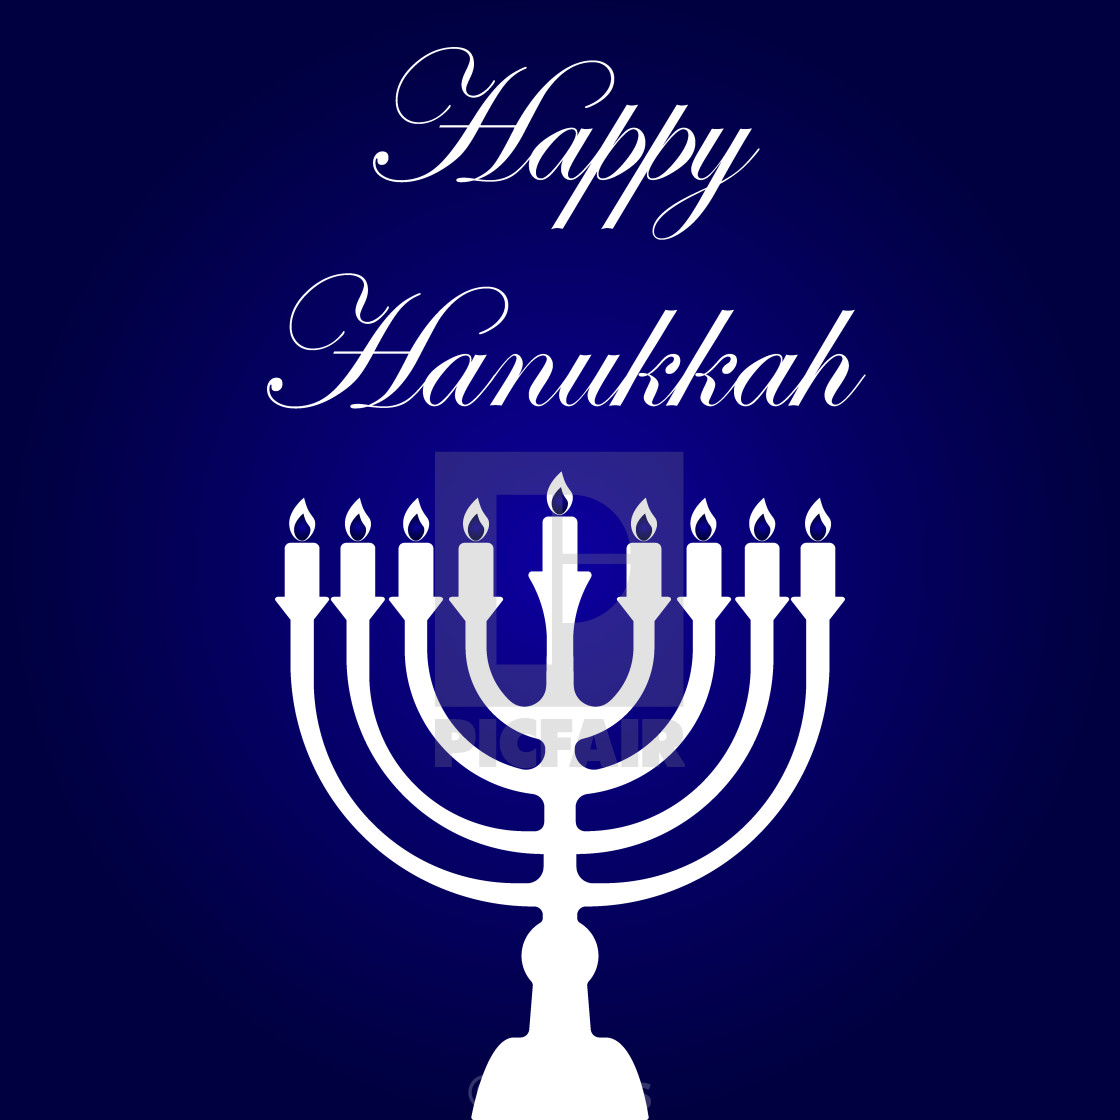 Happy Hanukkah card template. License, download or print for £6.20